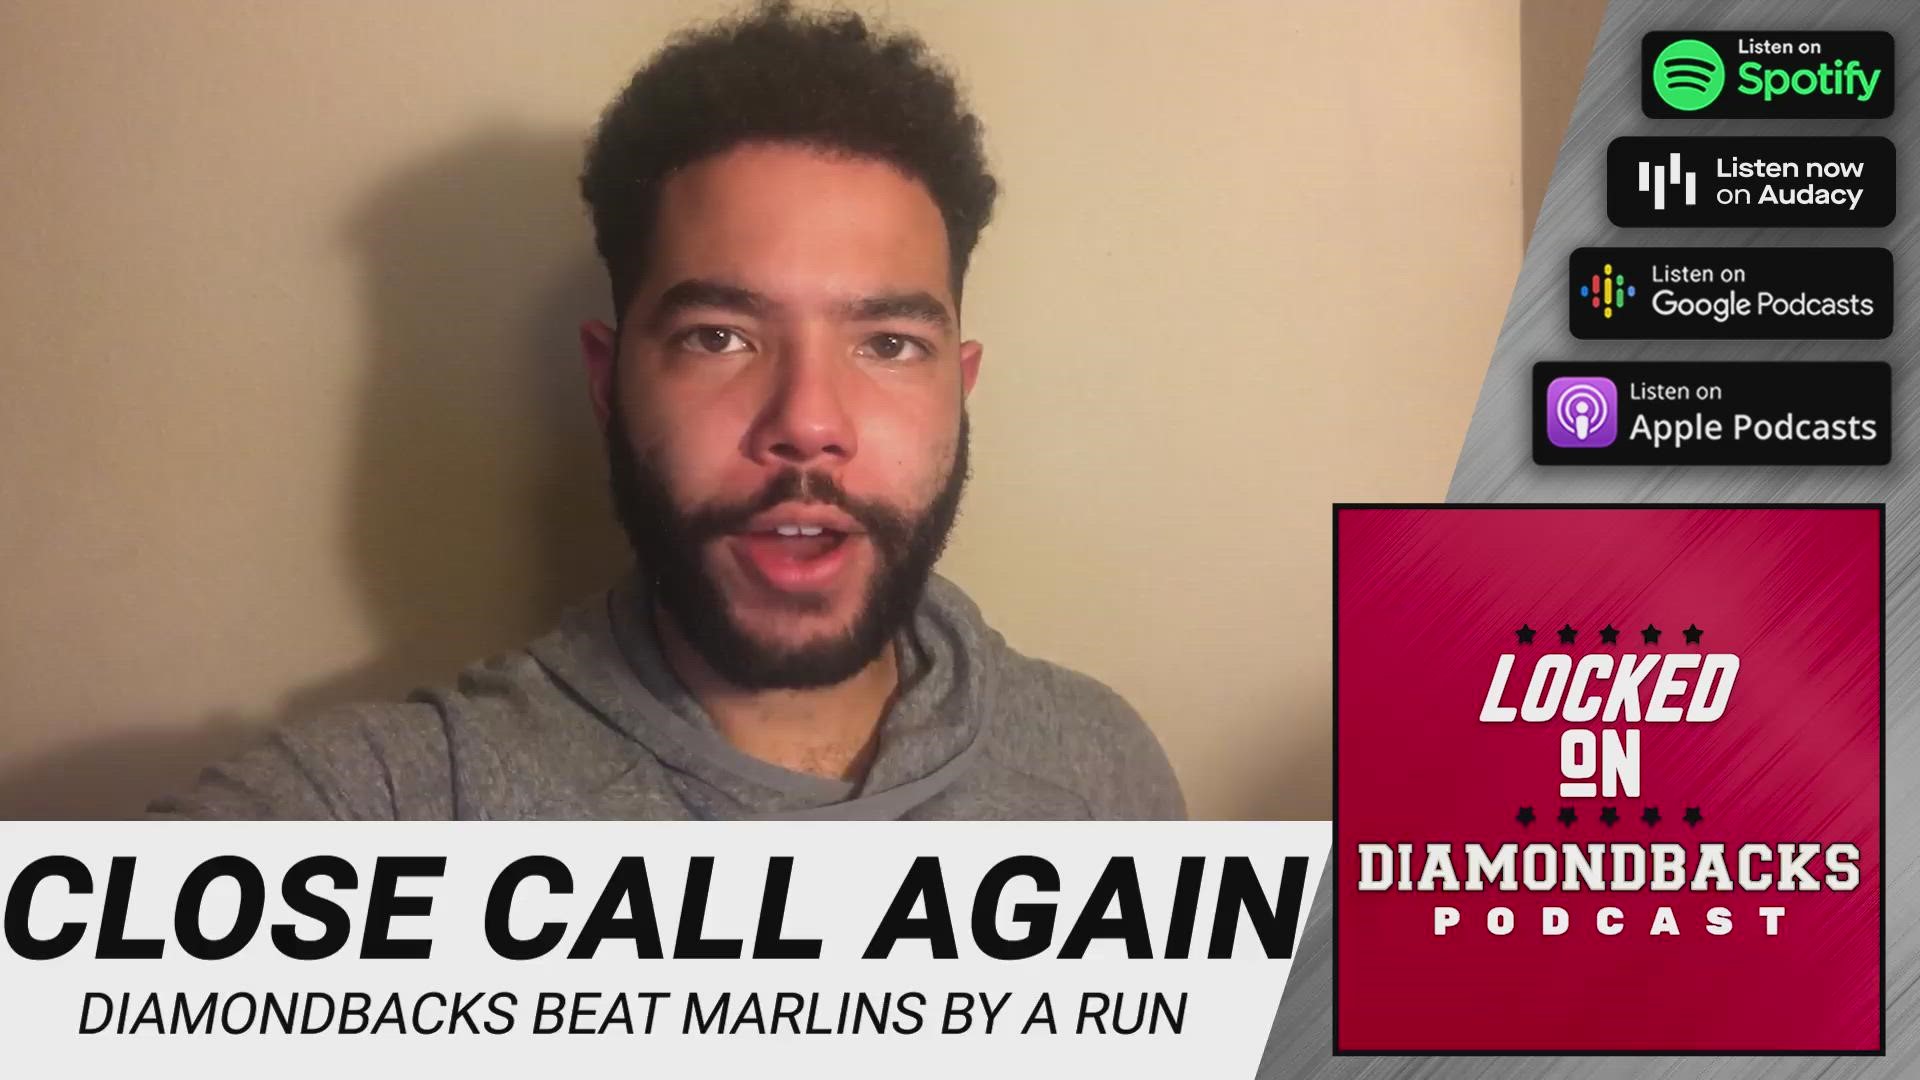 Madison Bumgarner ejected for Diamondbacks after 1 inning vs. Marlins